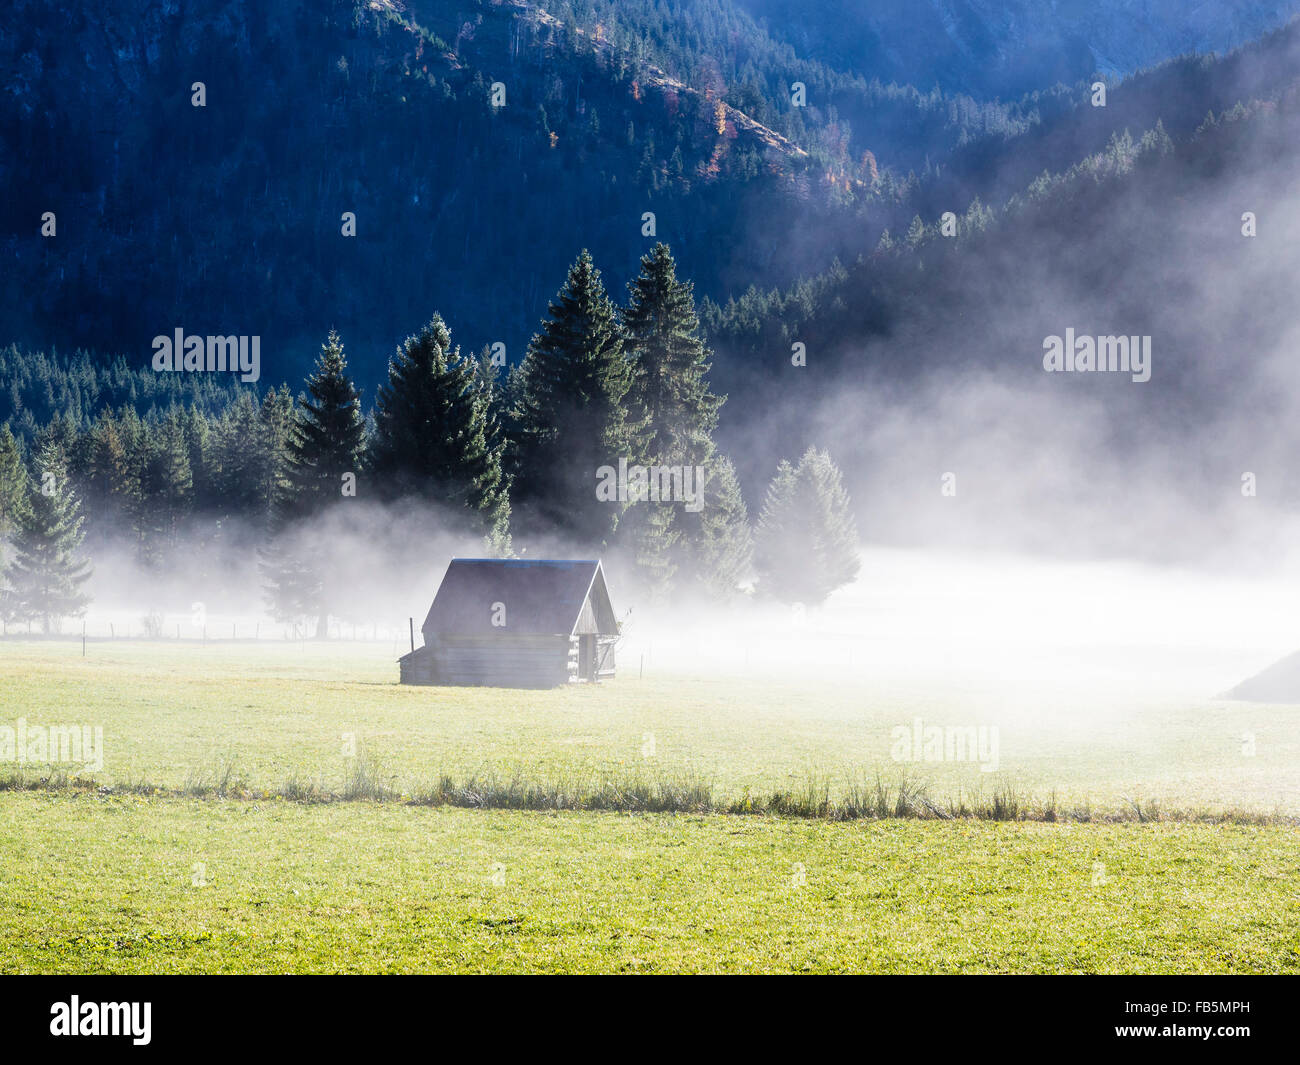 Valley Hinterstein, vicino a Bad Hindeland, alpino baita in legno, autunno, nebbia. Foto Stock